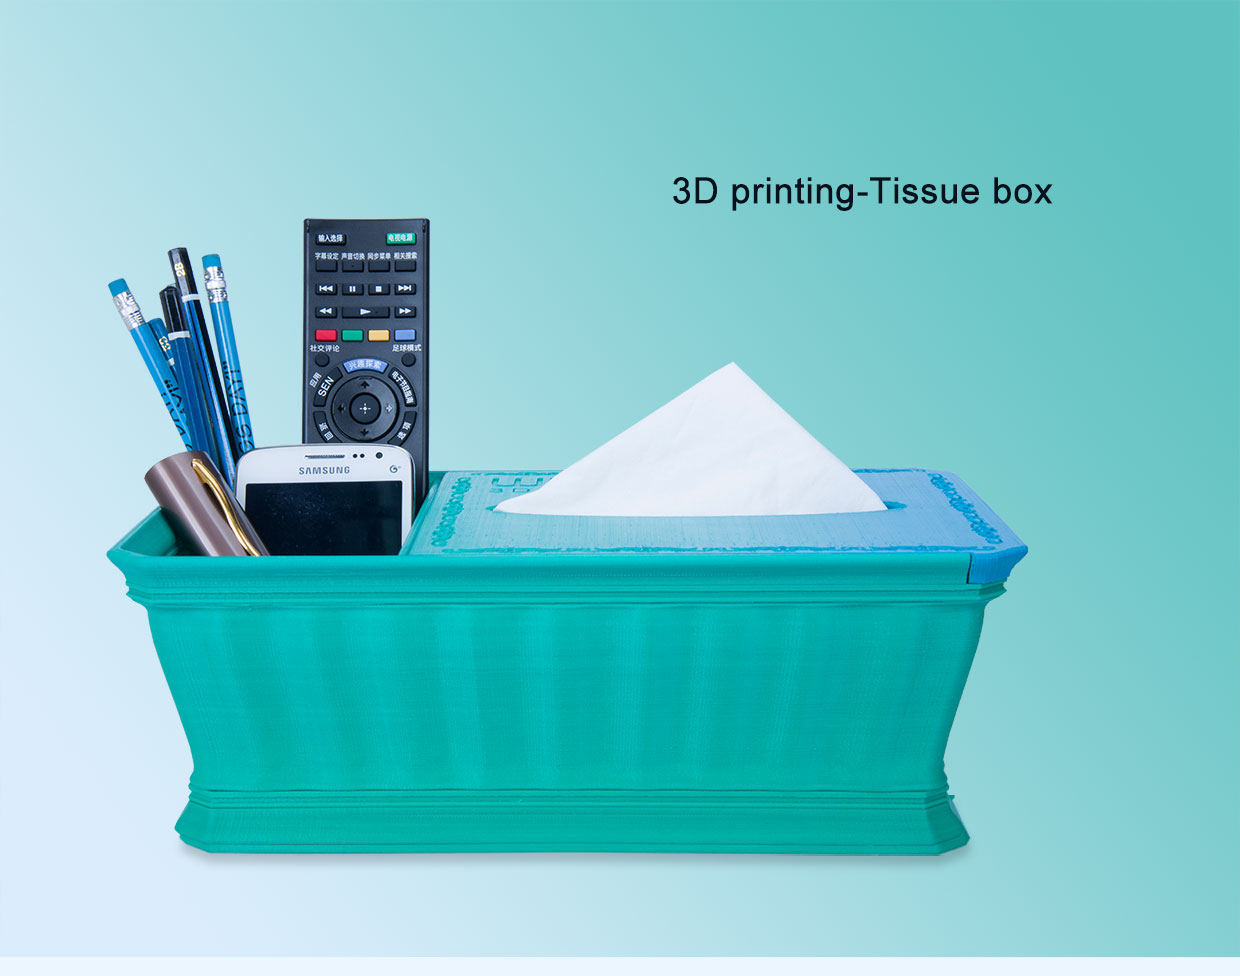 The 3D printed tissue box. Image via Winbo. 